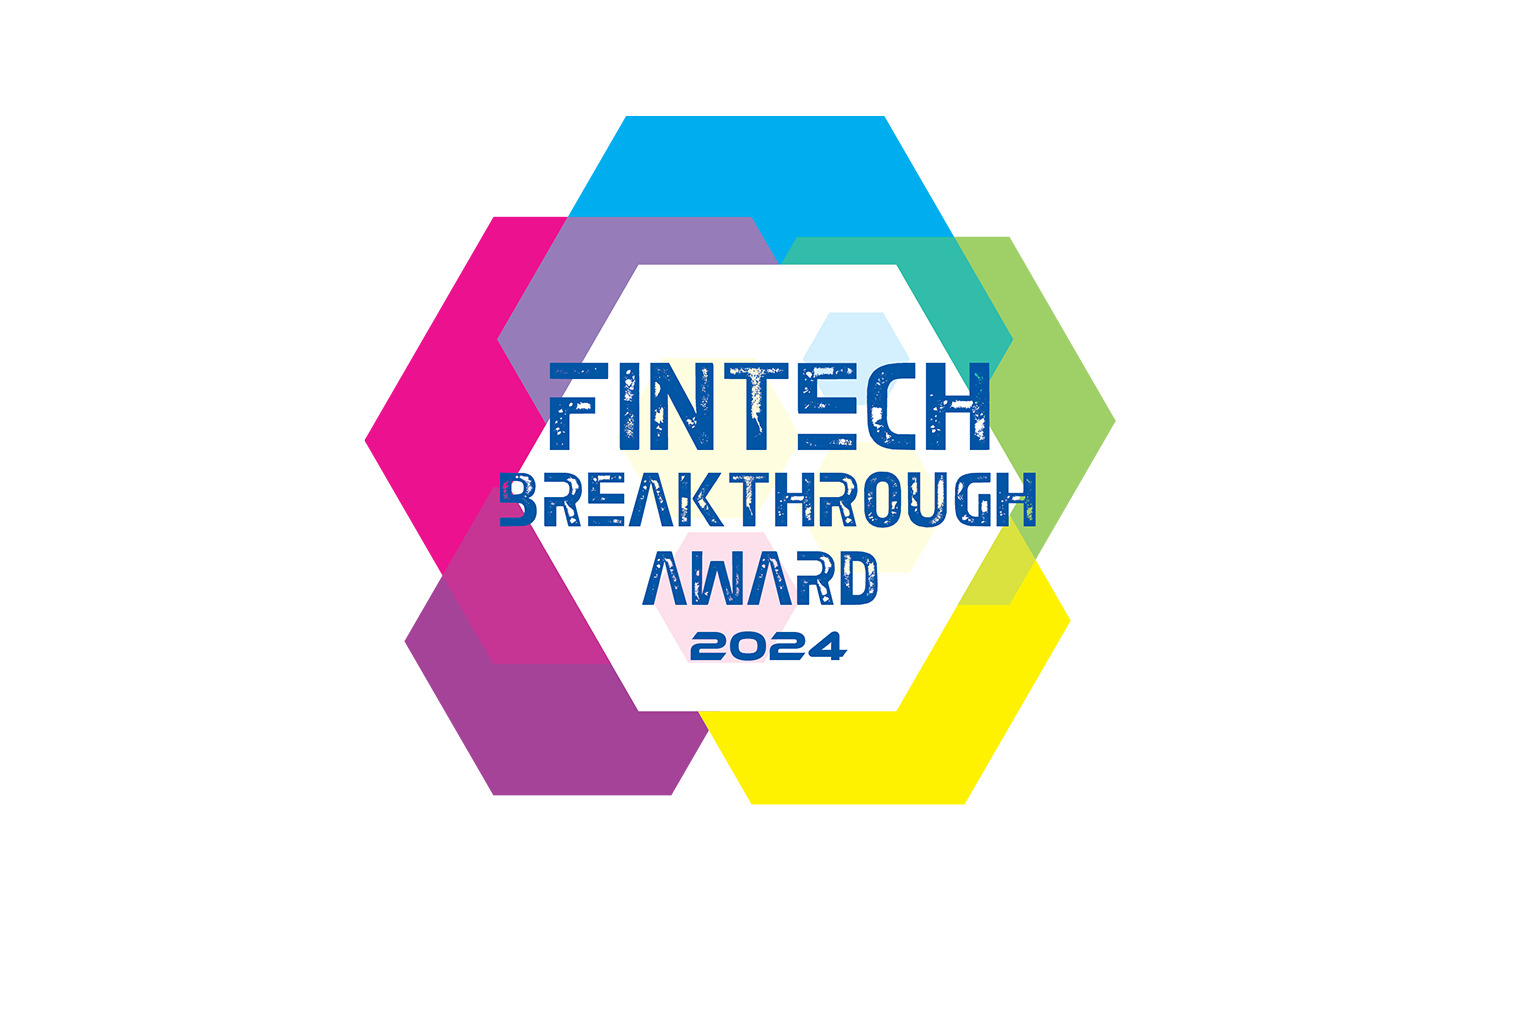 CT Corporation wins FinTech Breakthrough Award 2024